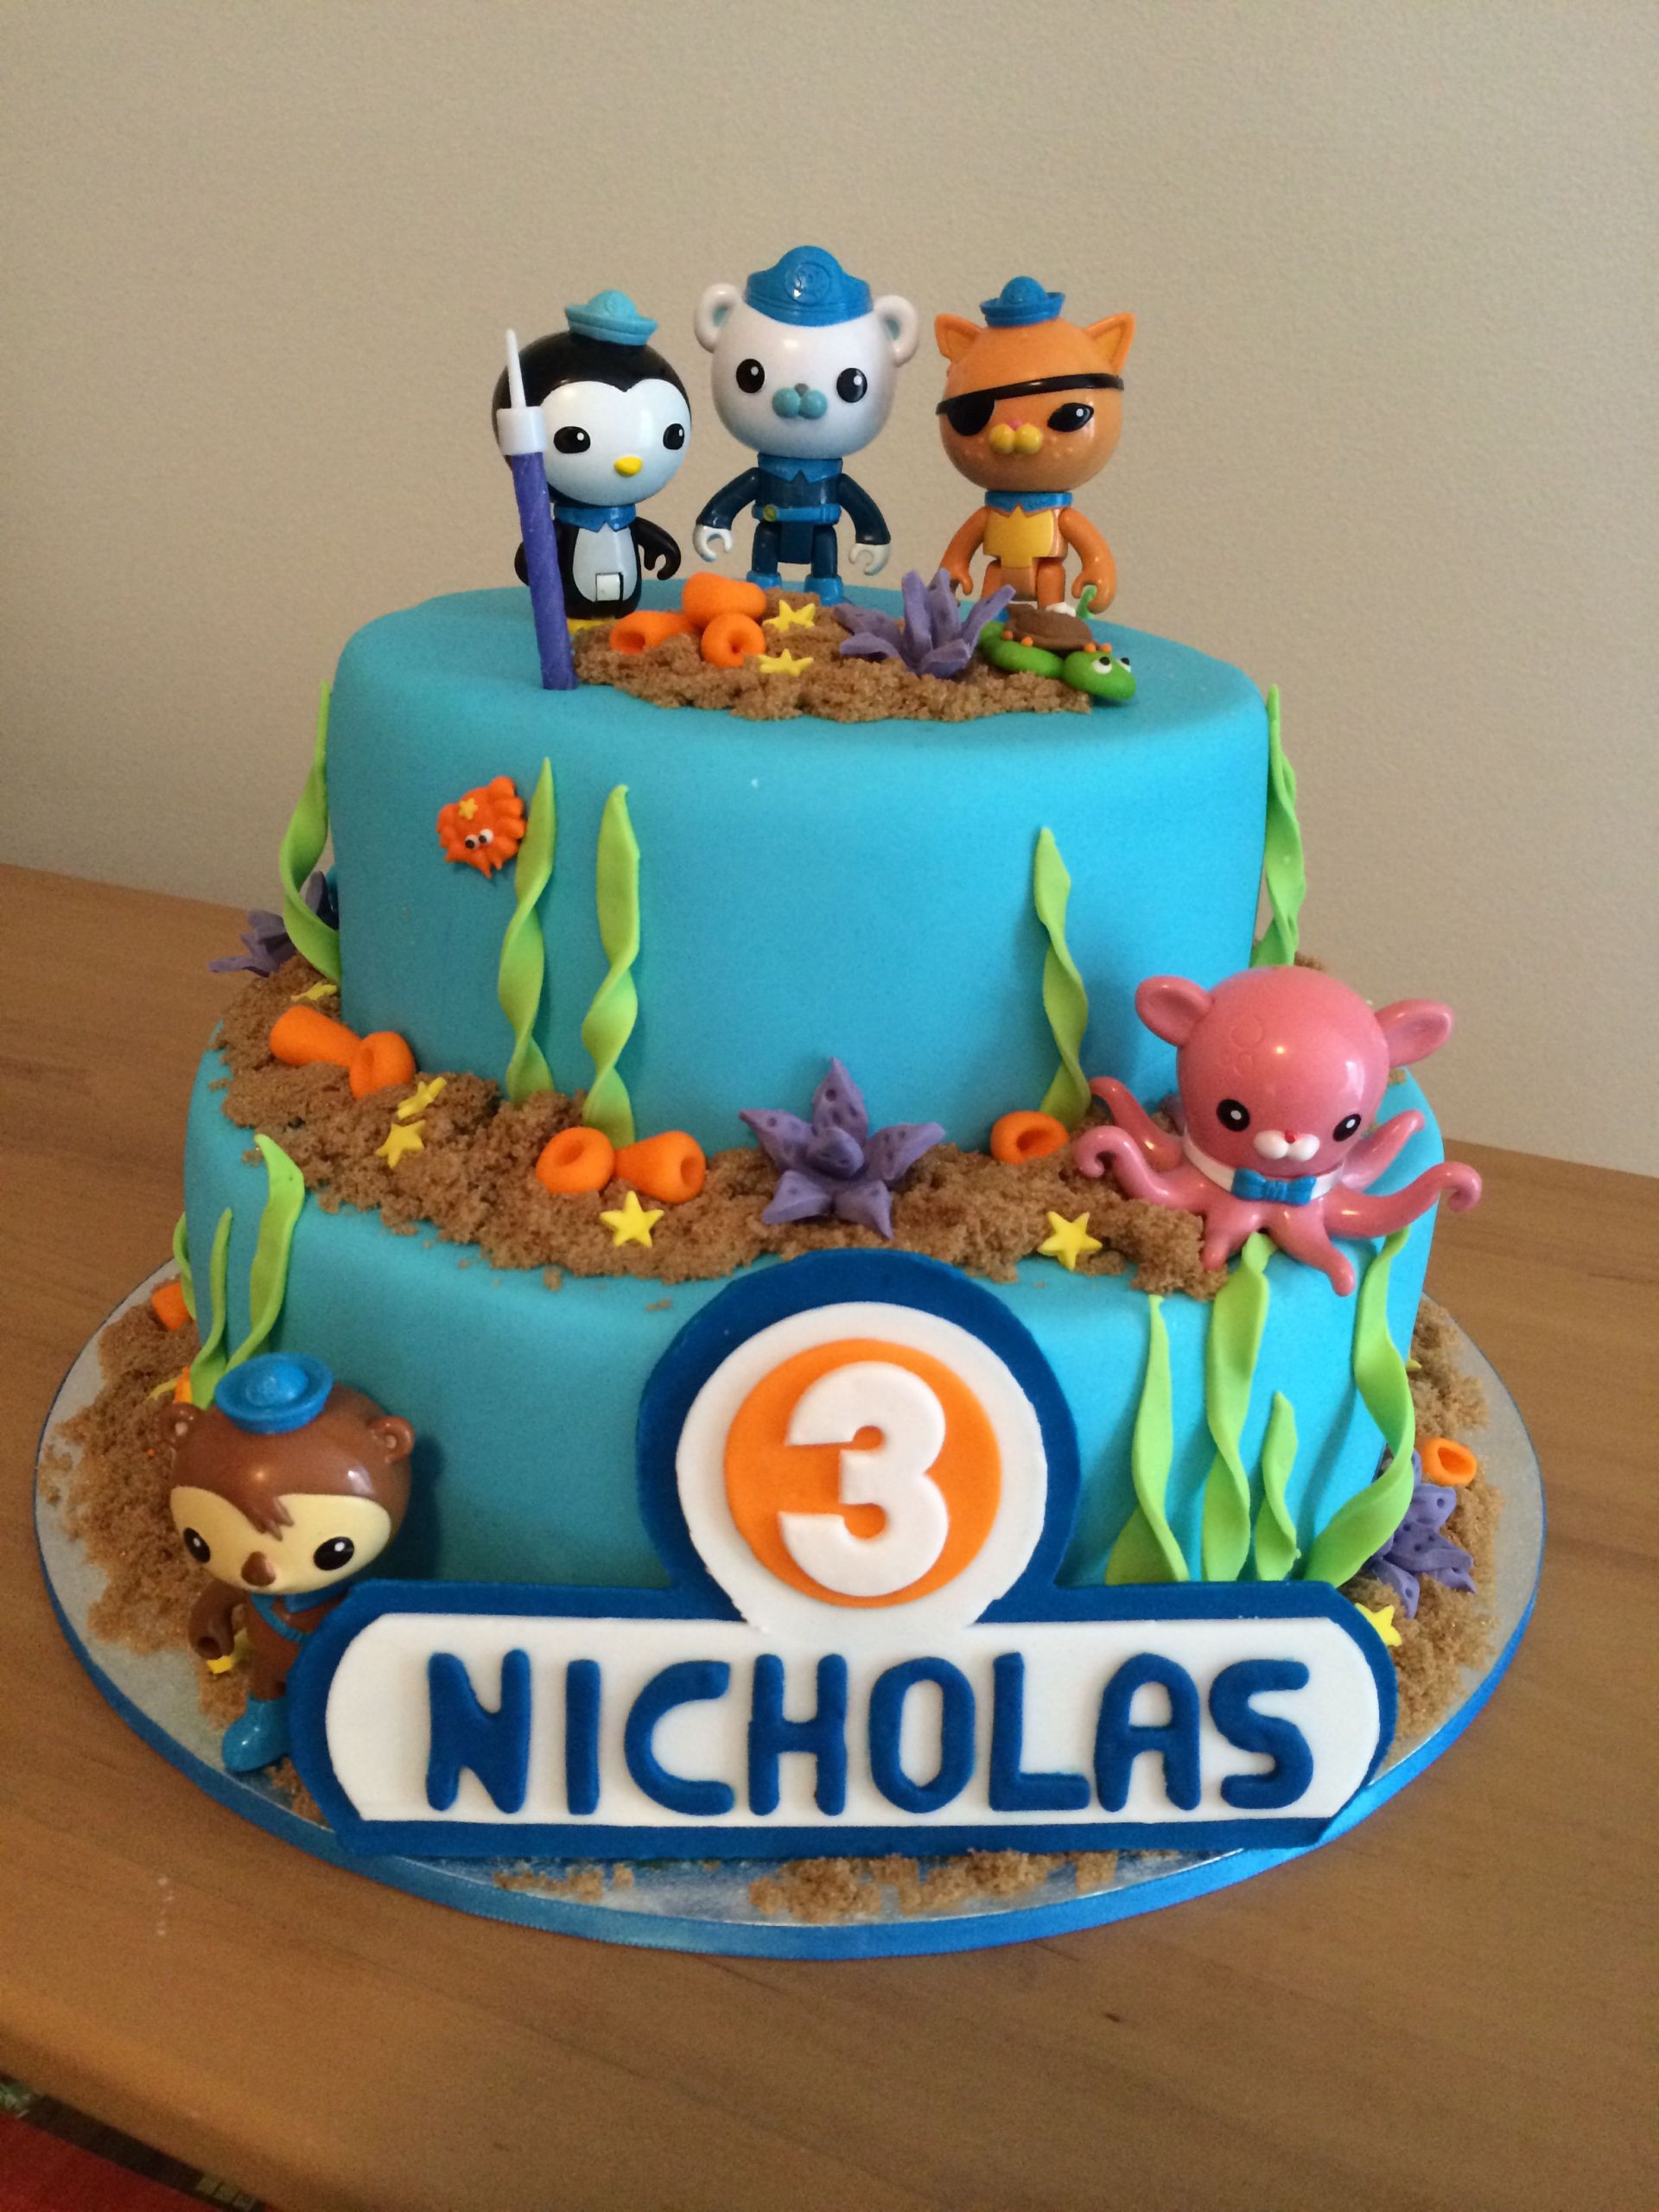 Octonauts Birthday Cake
 Octonauts cake for Nicholas